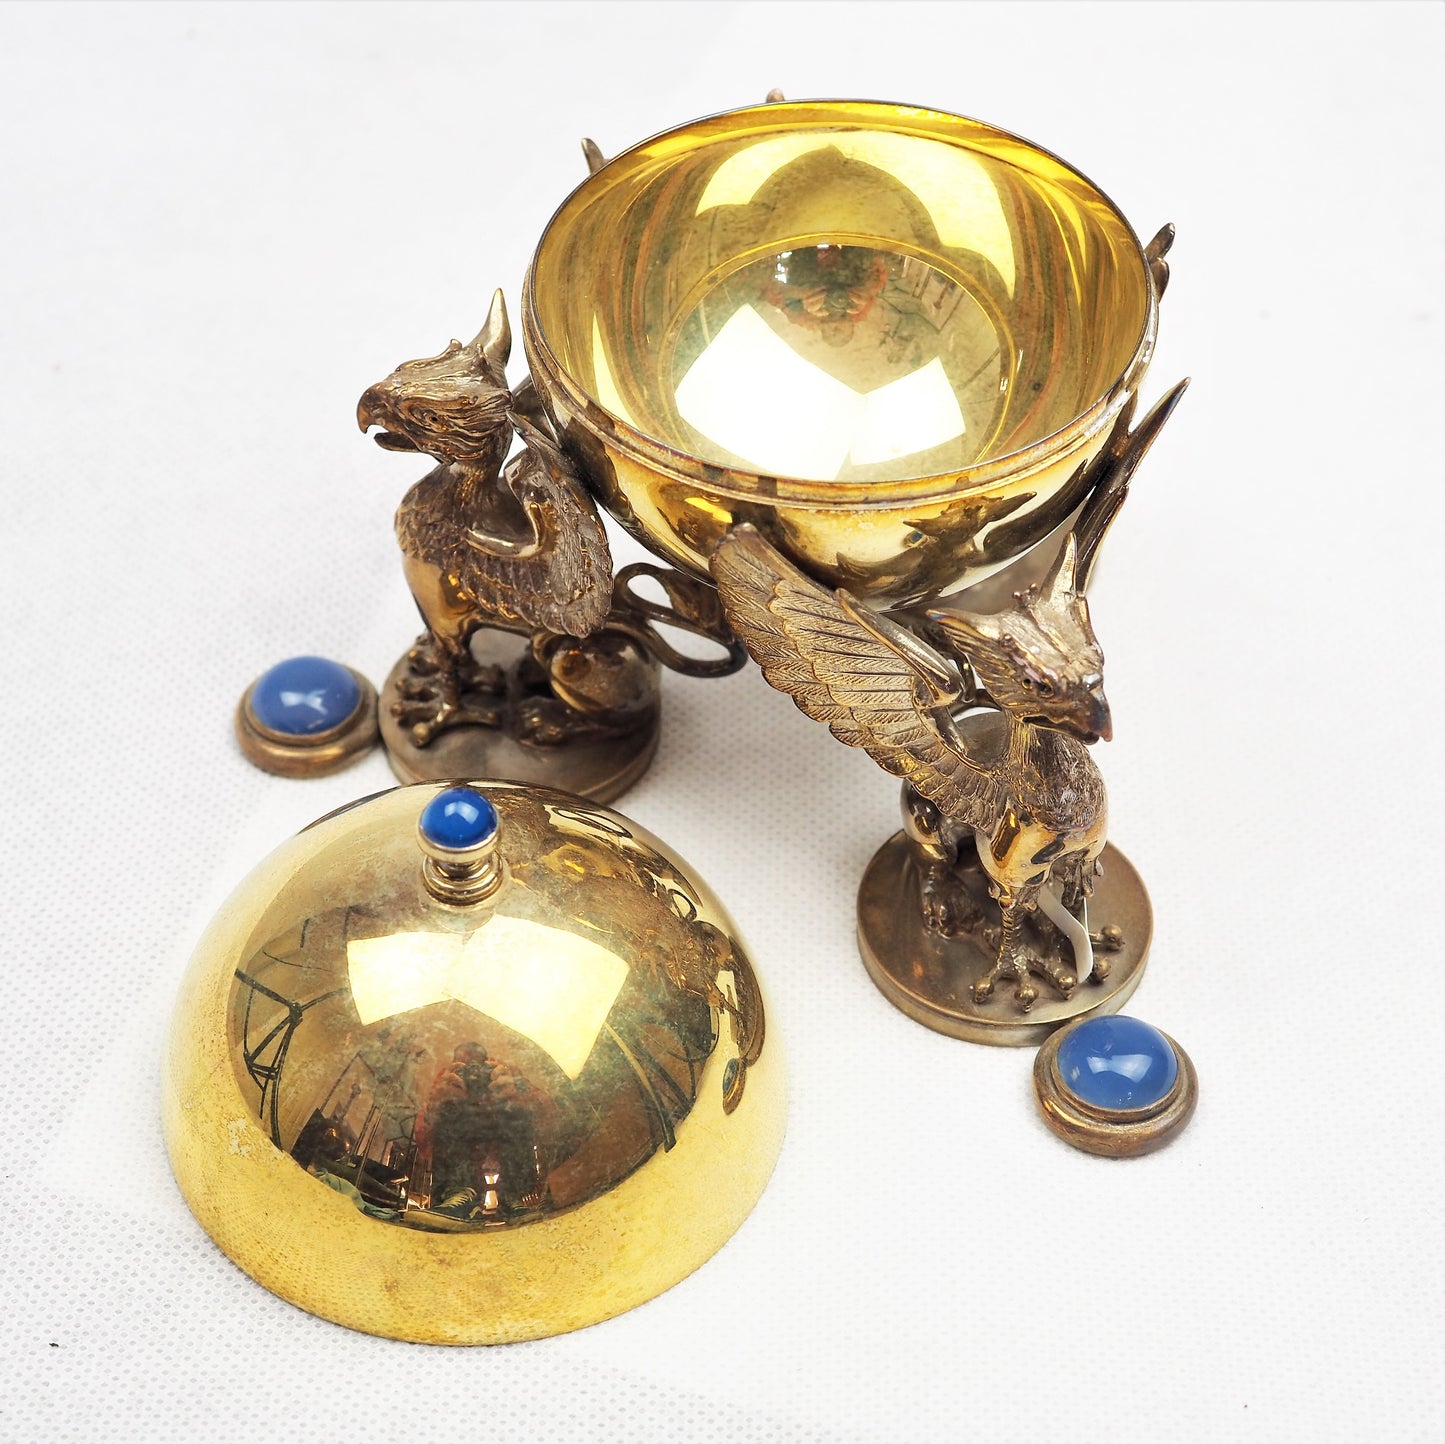 Jones, Sarah - Two Piece Gilded Silver Lidded Ornaments | Sarah Jones | Primavera Gallery